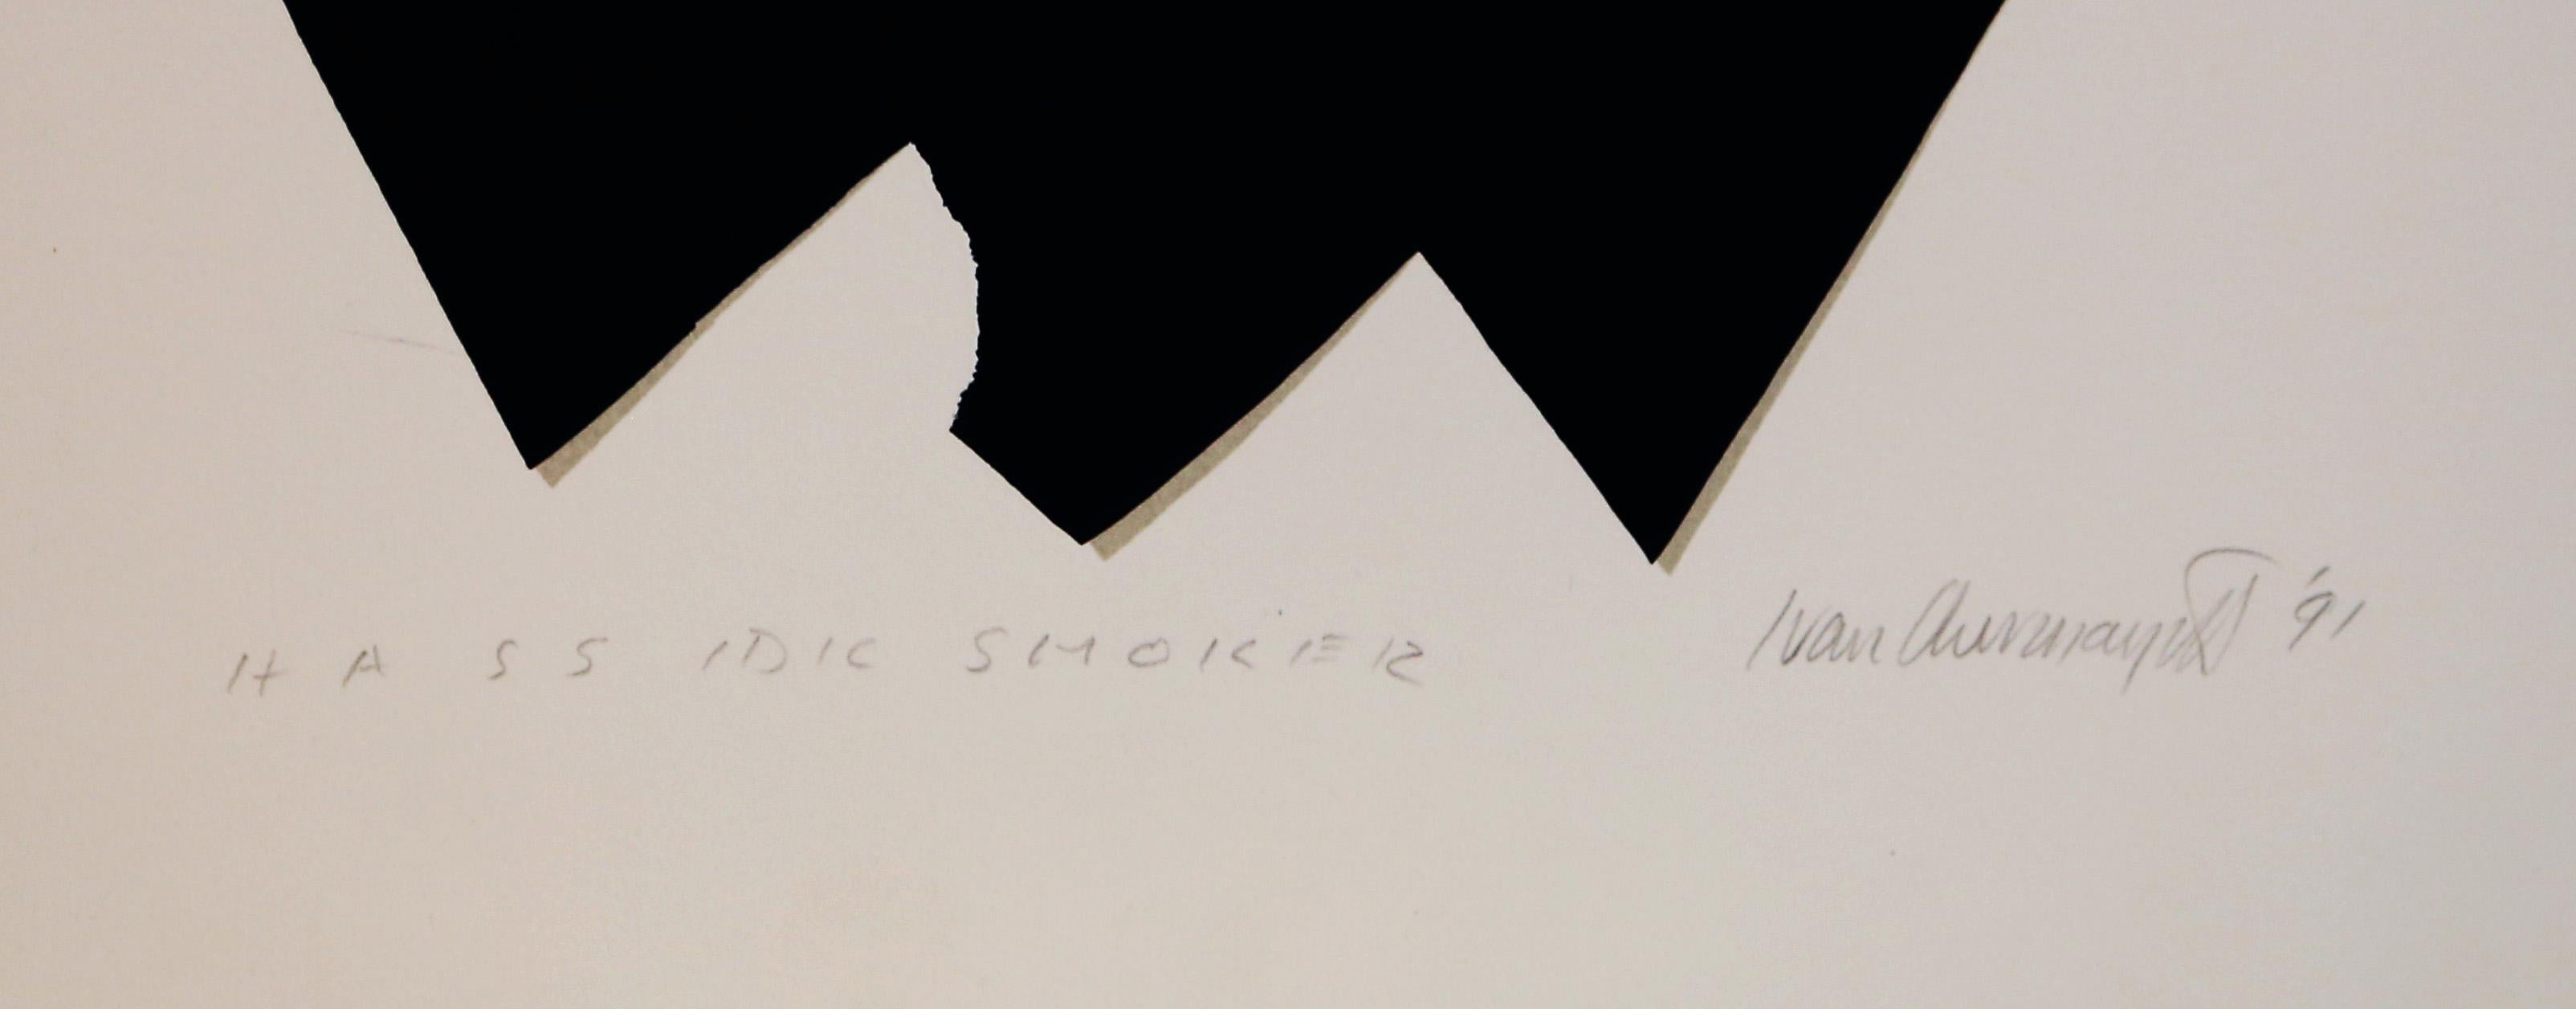 Hassidic Smoker, Abstract Screenprint by Ivan Chermayeff For Sale 1